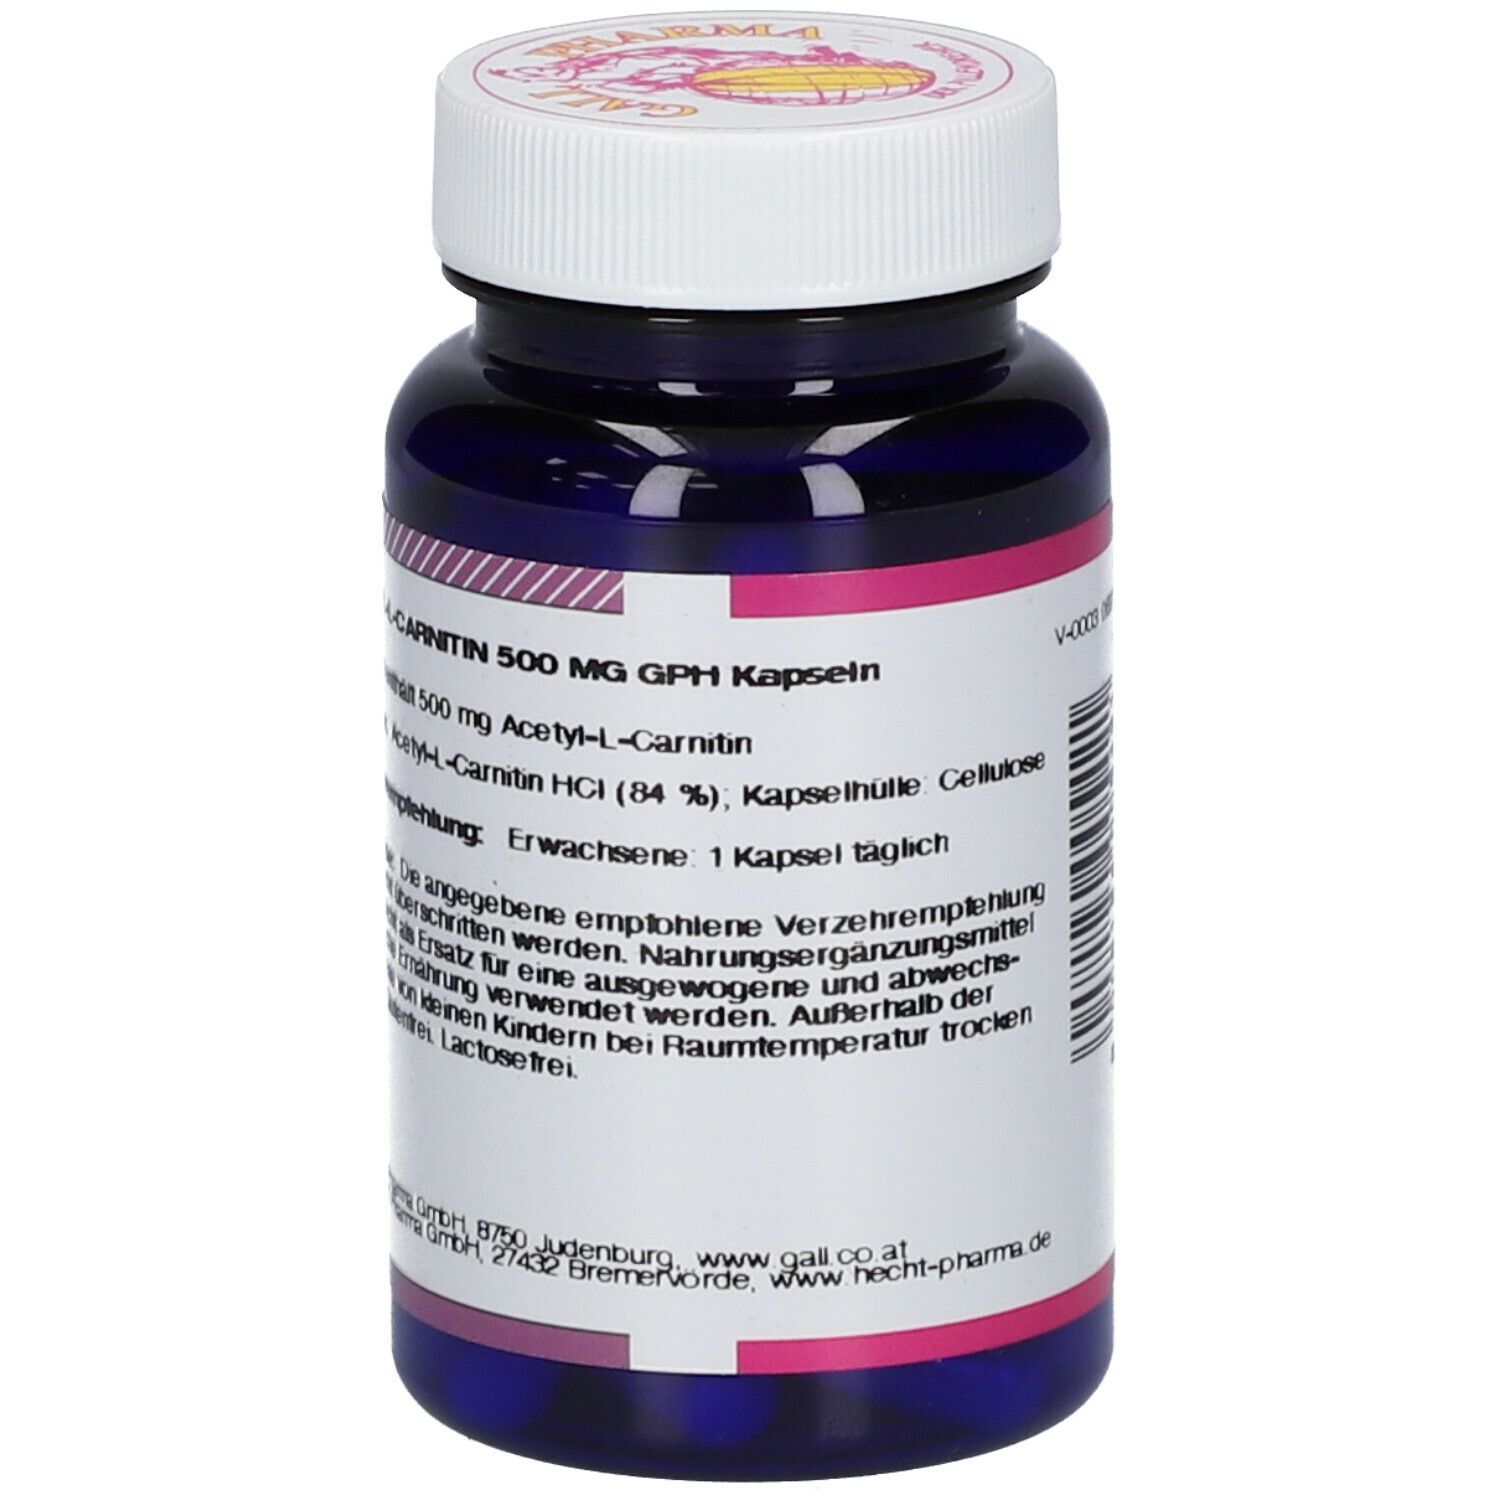 GALL PHARMA Acetyl-L-Carnitin 500 mg GPH Kapseln, 60 St